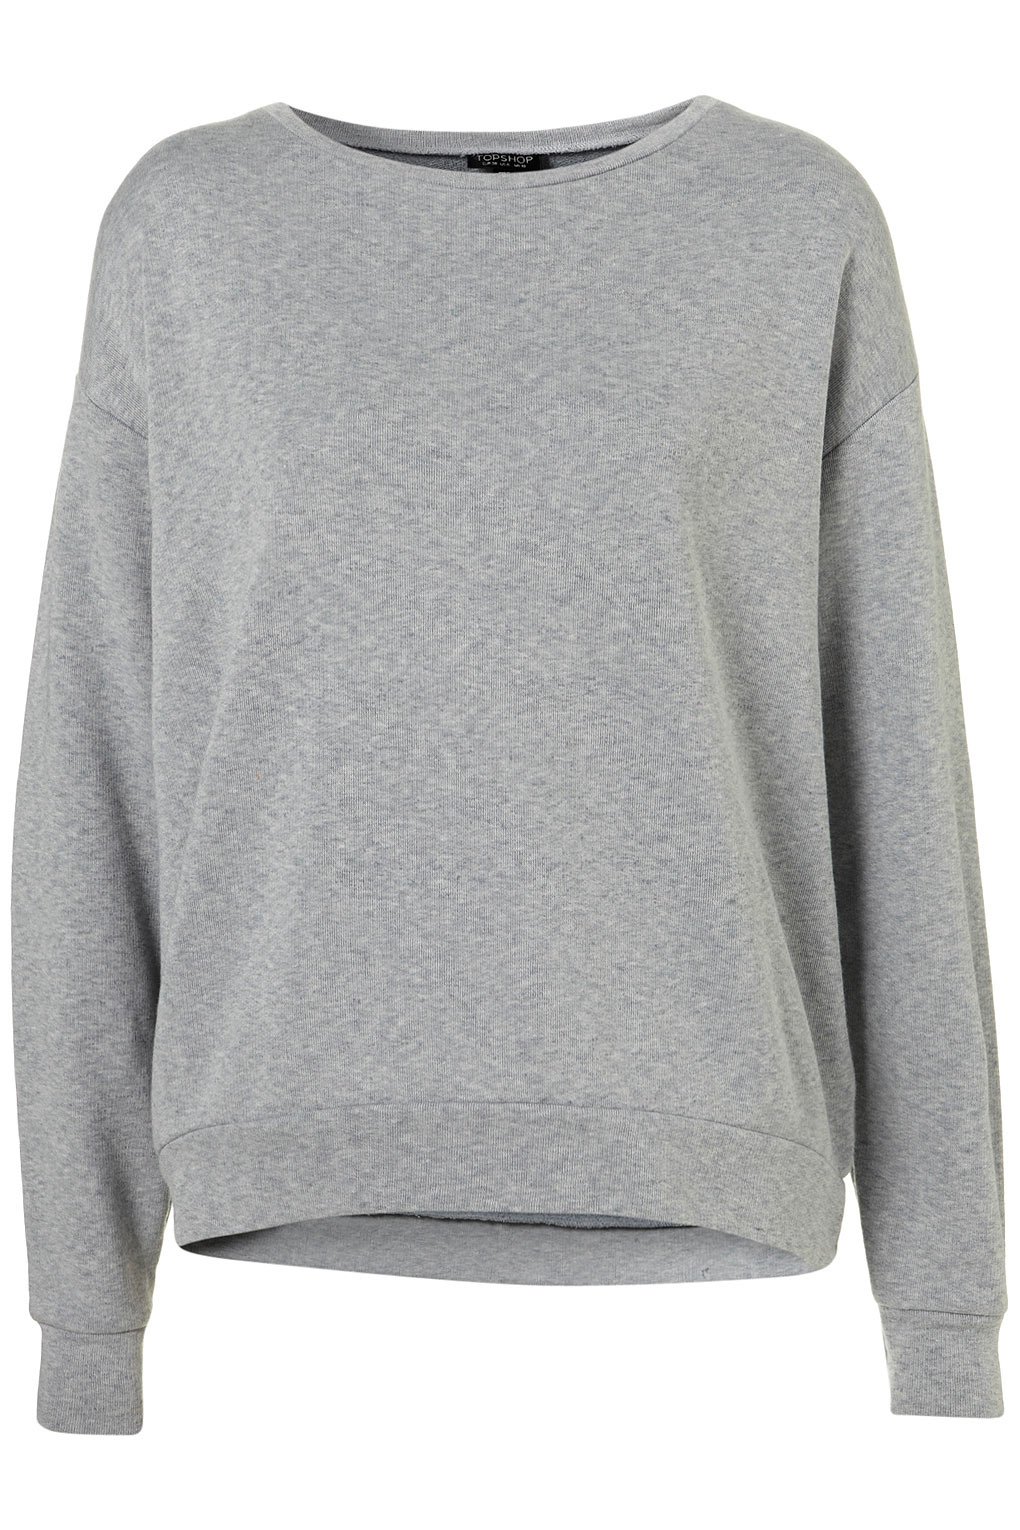 Lyst - Topshop Curve Hem Sweater in Gray